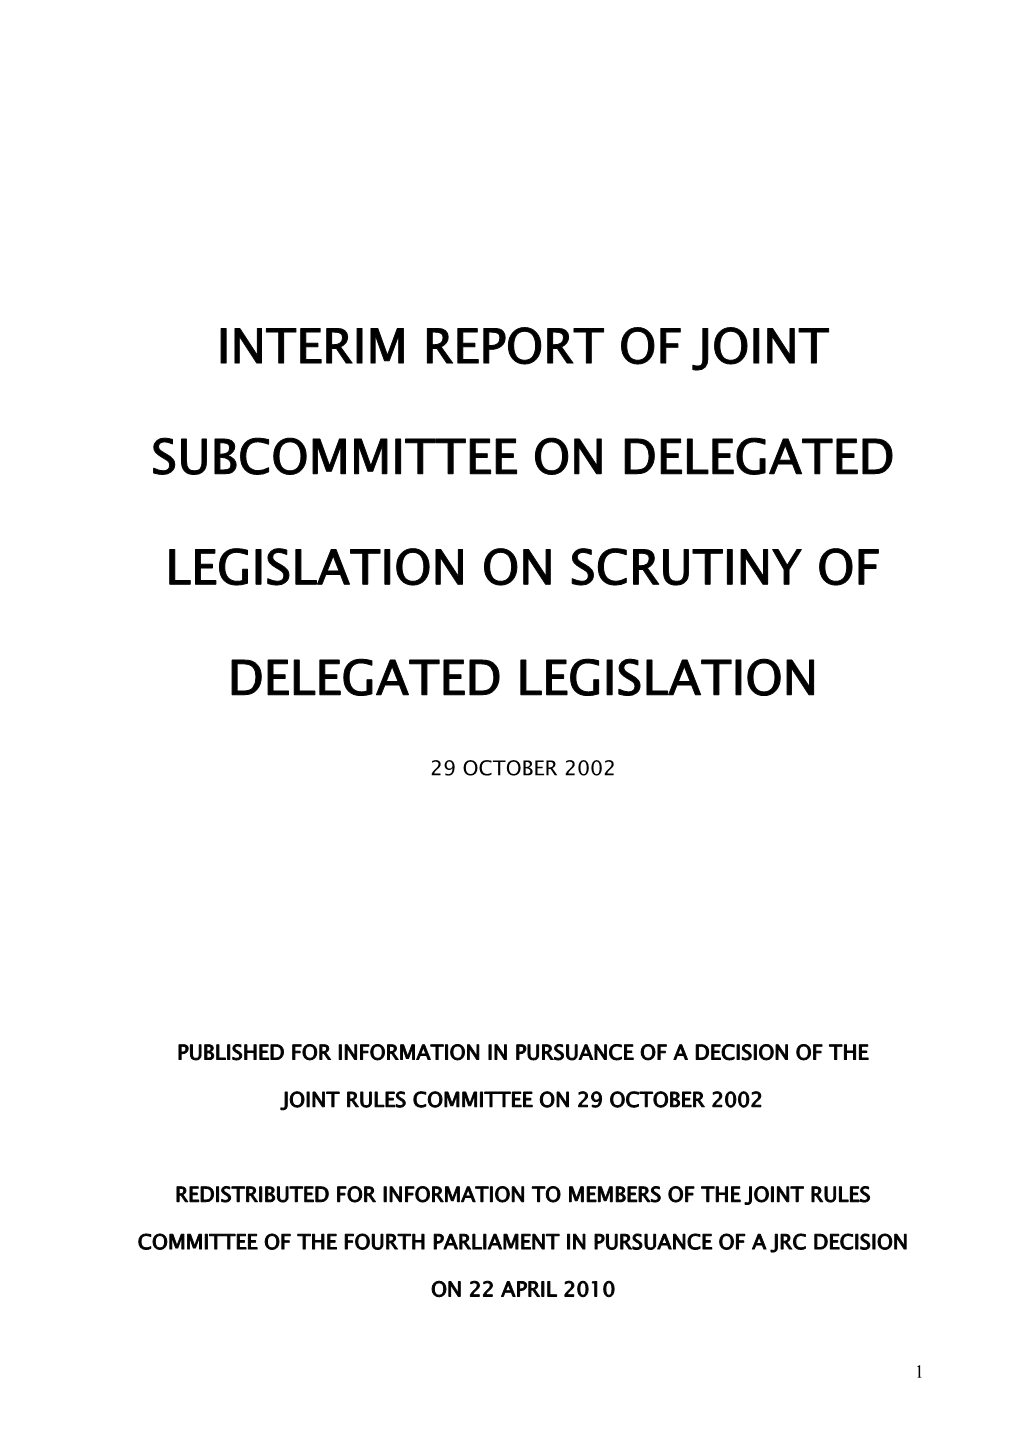 Interim Report of Joint Subcommittee on Delegated Legislation